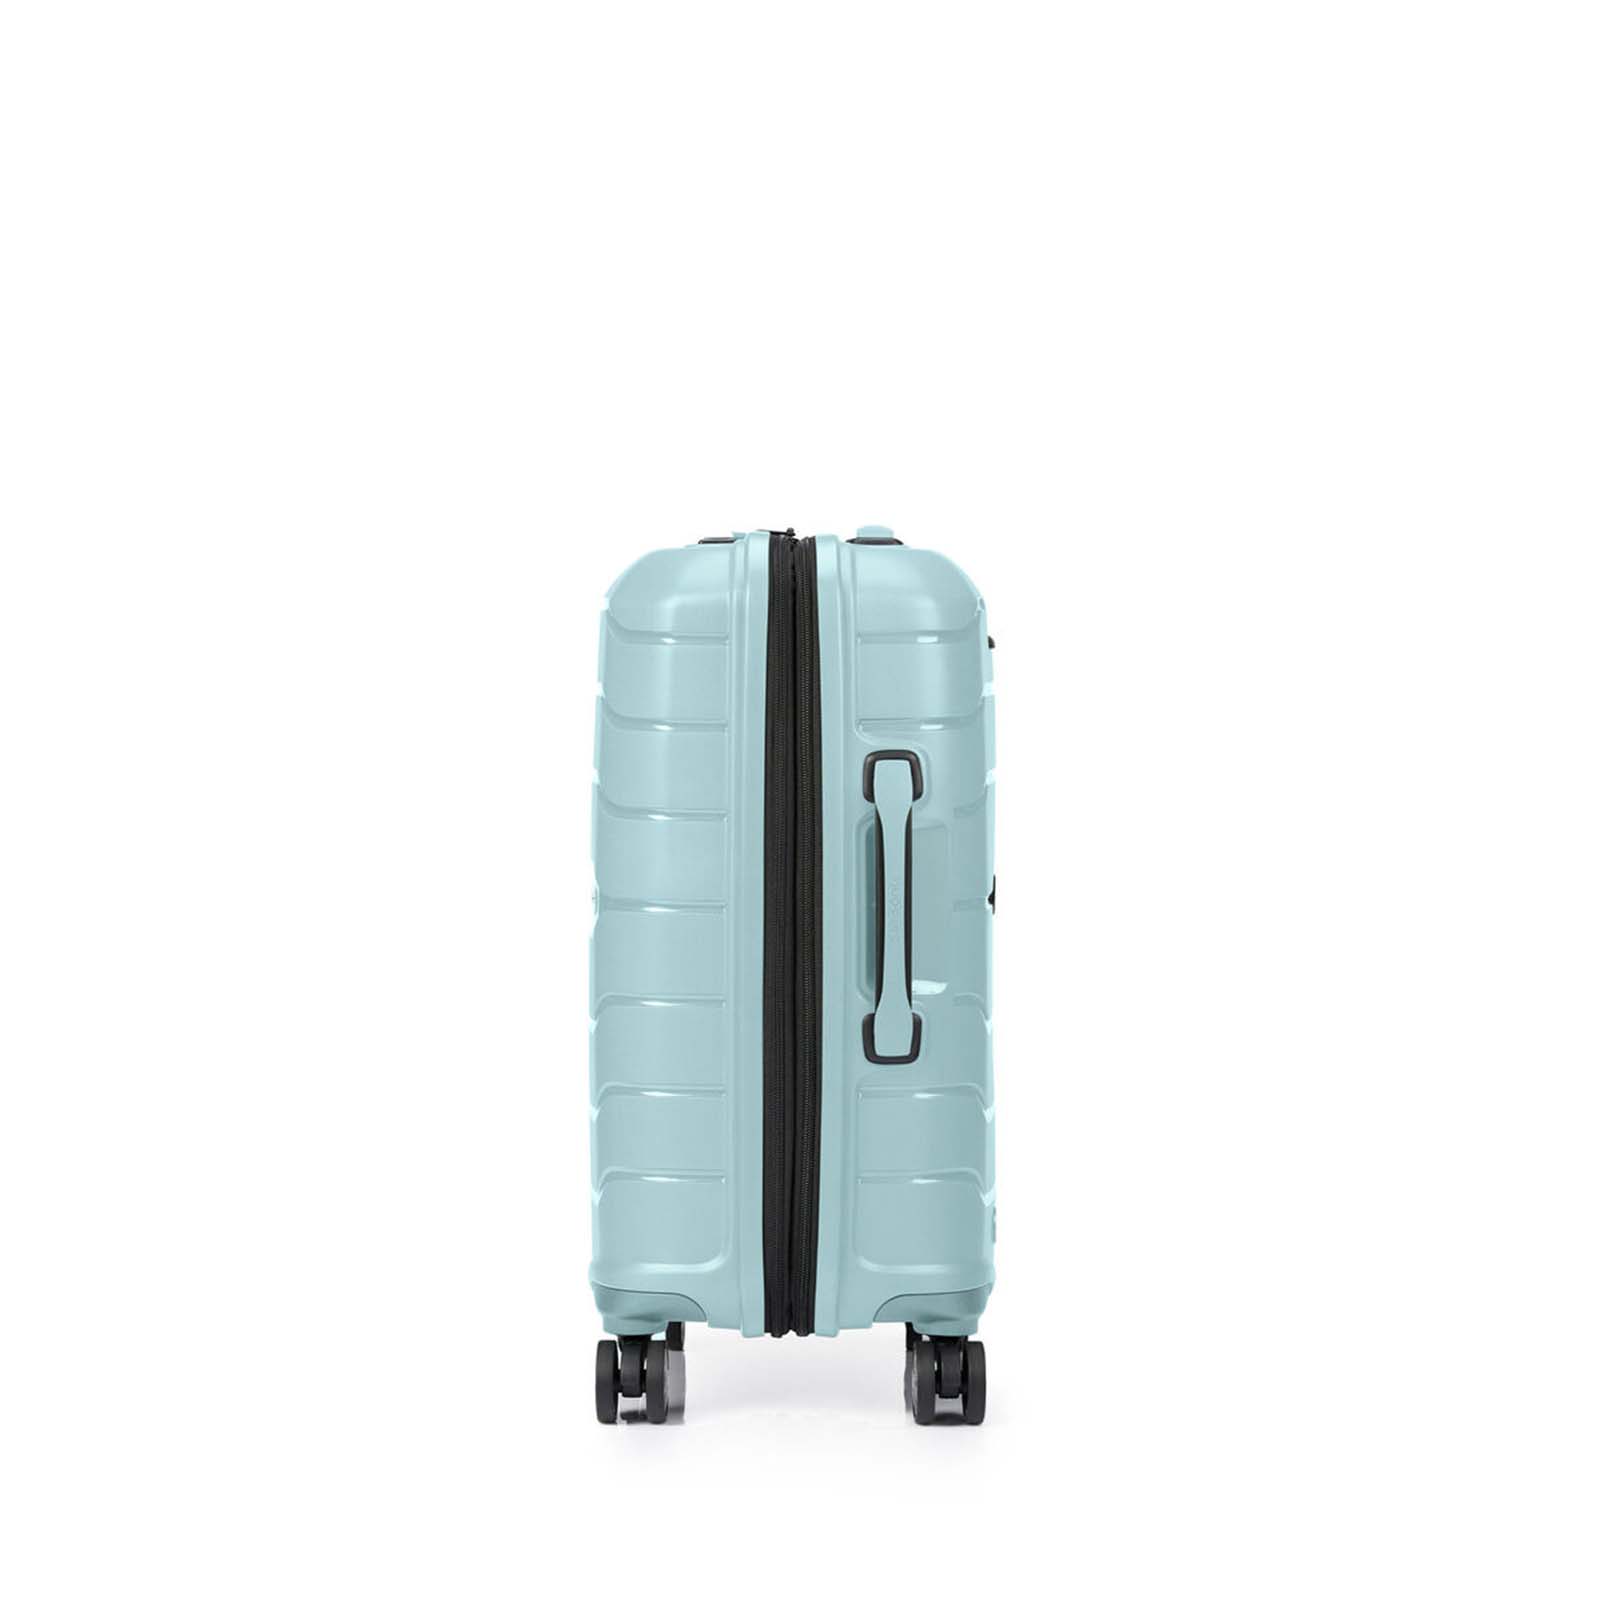 Samsonite-Oc2lite-55cm-Carry-On-Suitcase-Lagoon-Blue-Handle